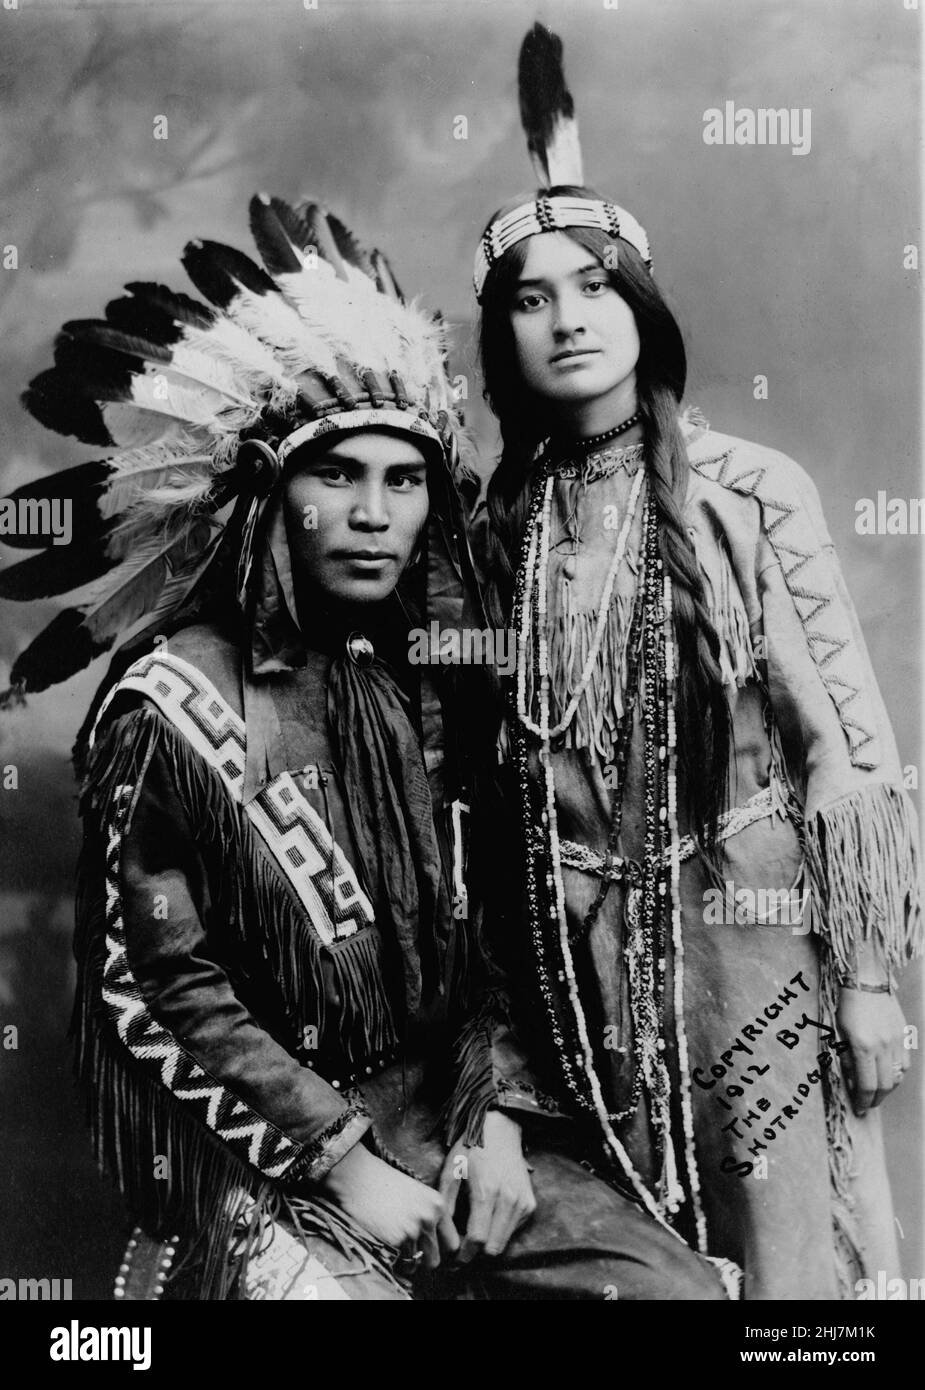 Situwuka et Katkwachsnea. Vers 1912 - photo ancienne et ancienne - amérindien / indien / américain. Photo de Shotridges. Banque D'Images